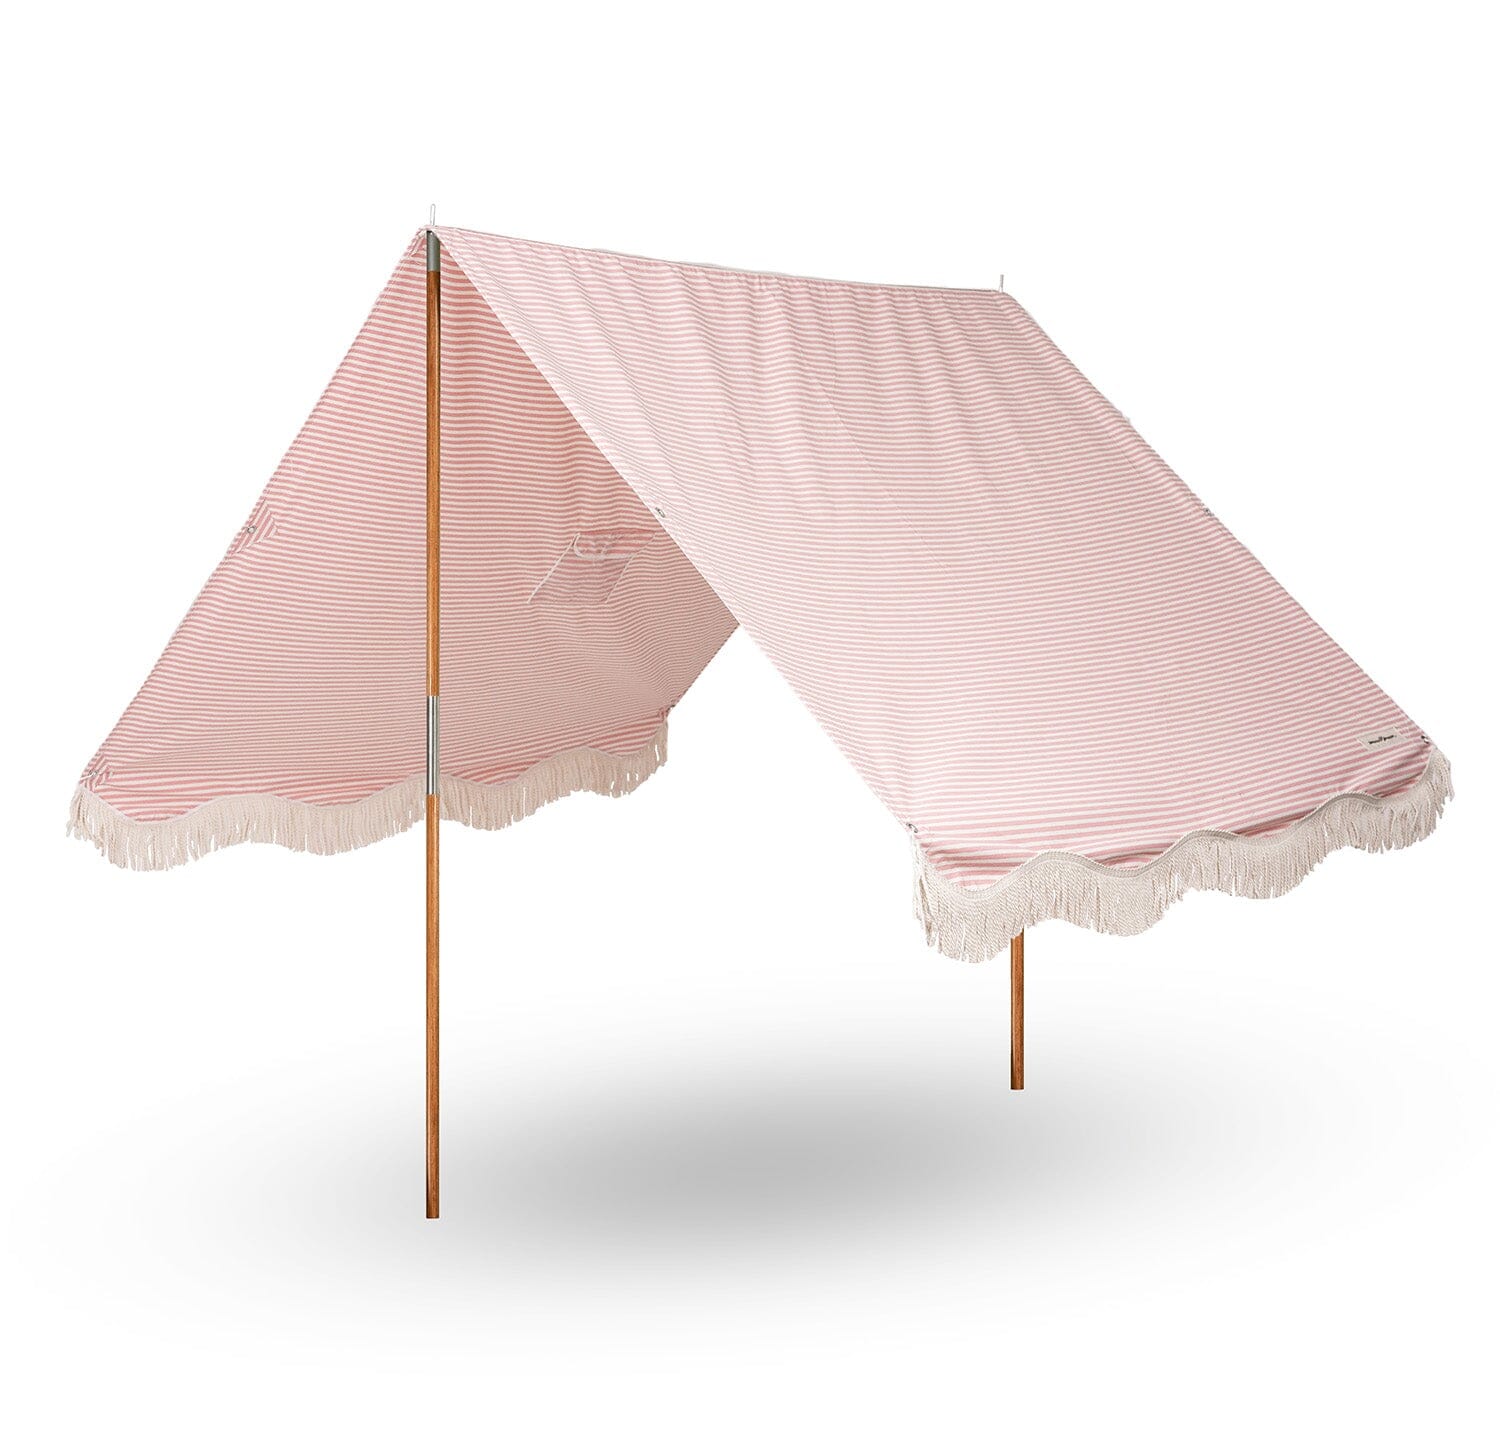 The Premium Beach Tent - Lauren's Pink Stripe